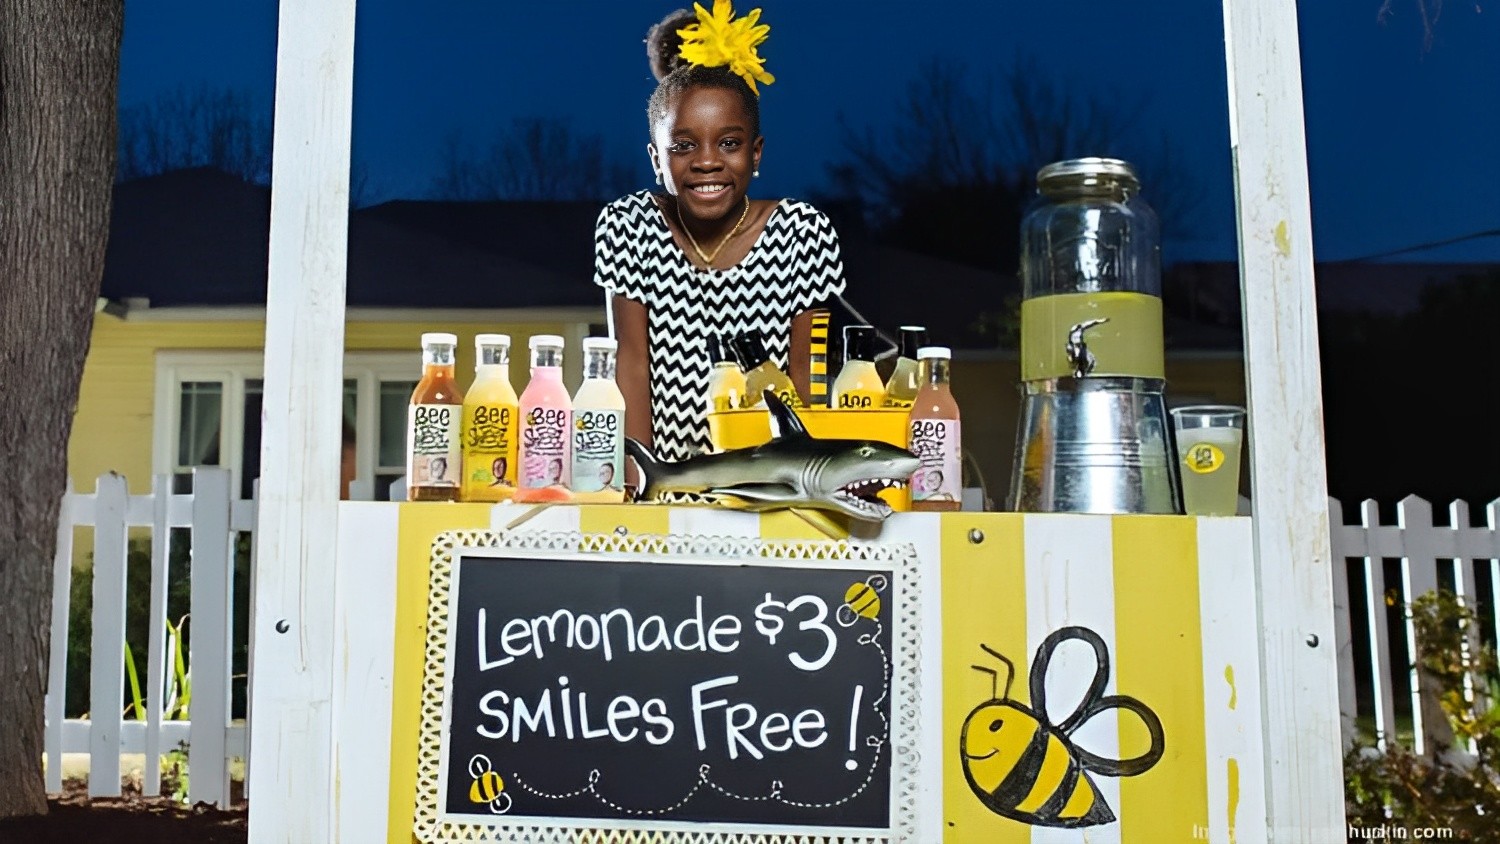 Mikaila Ulmer, Founder, Me & The Bees Lemonade